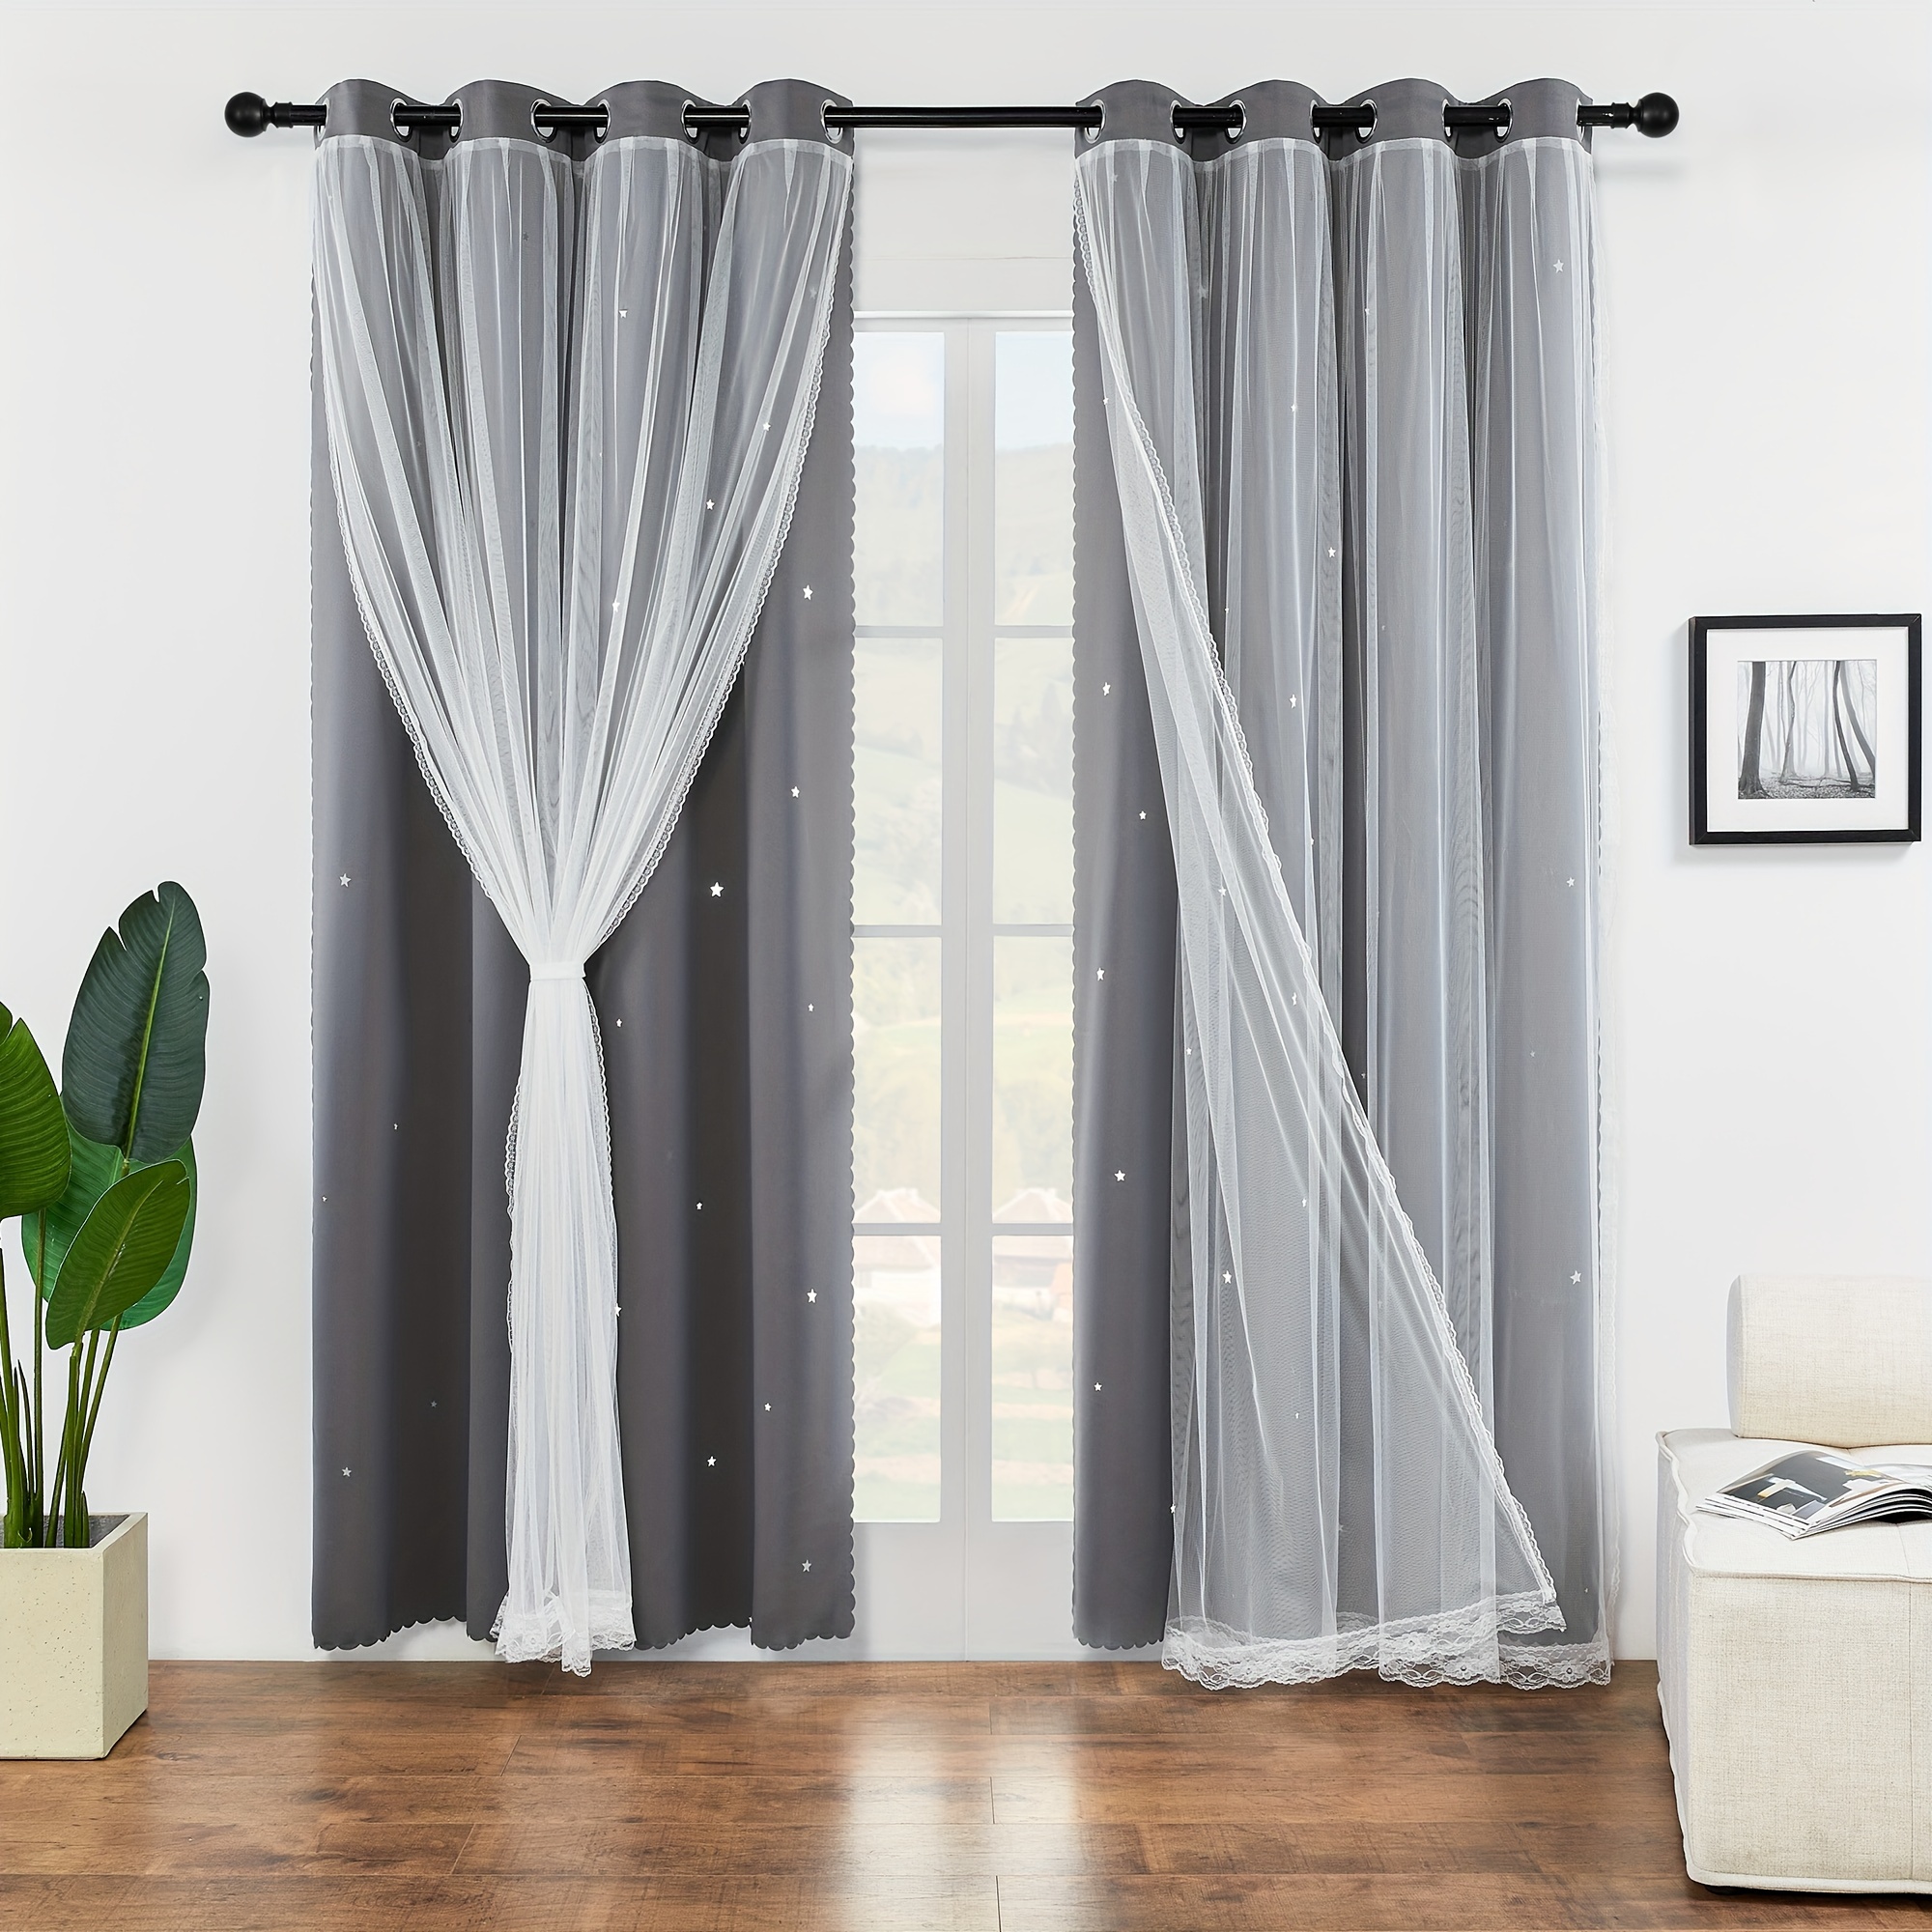 Cortinas opacas de doble capa, color gris, con tratamiento de ventana,  cortina de gasa de doble cubierta, cortinas opacas de tul bordadas, cortina  de